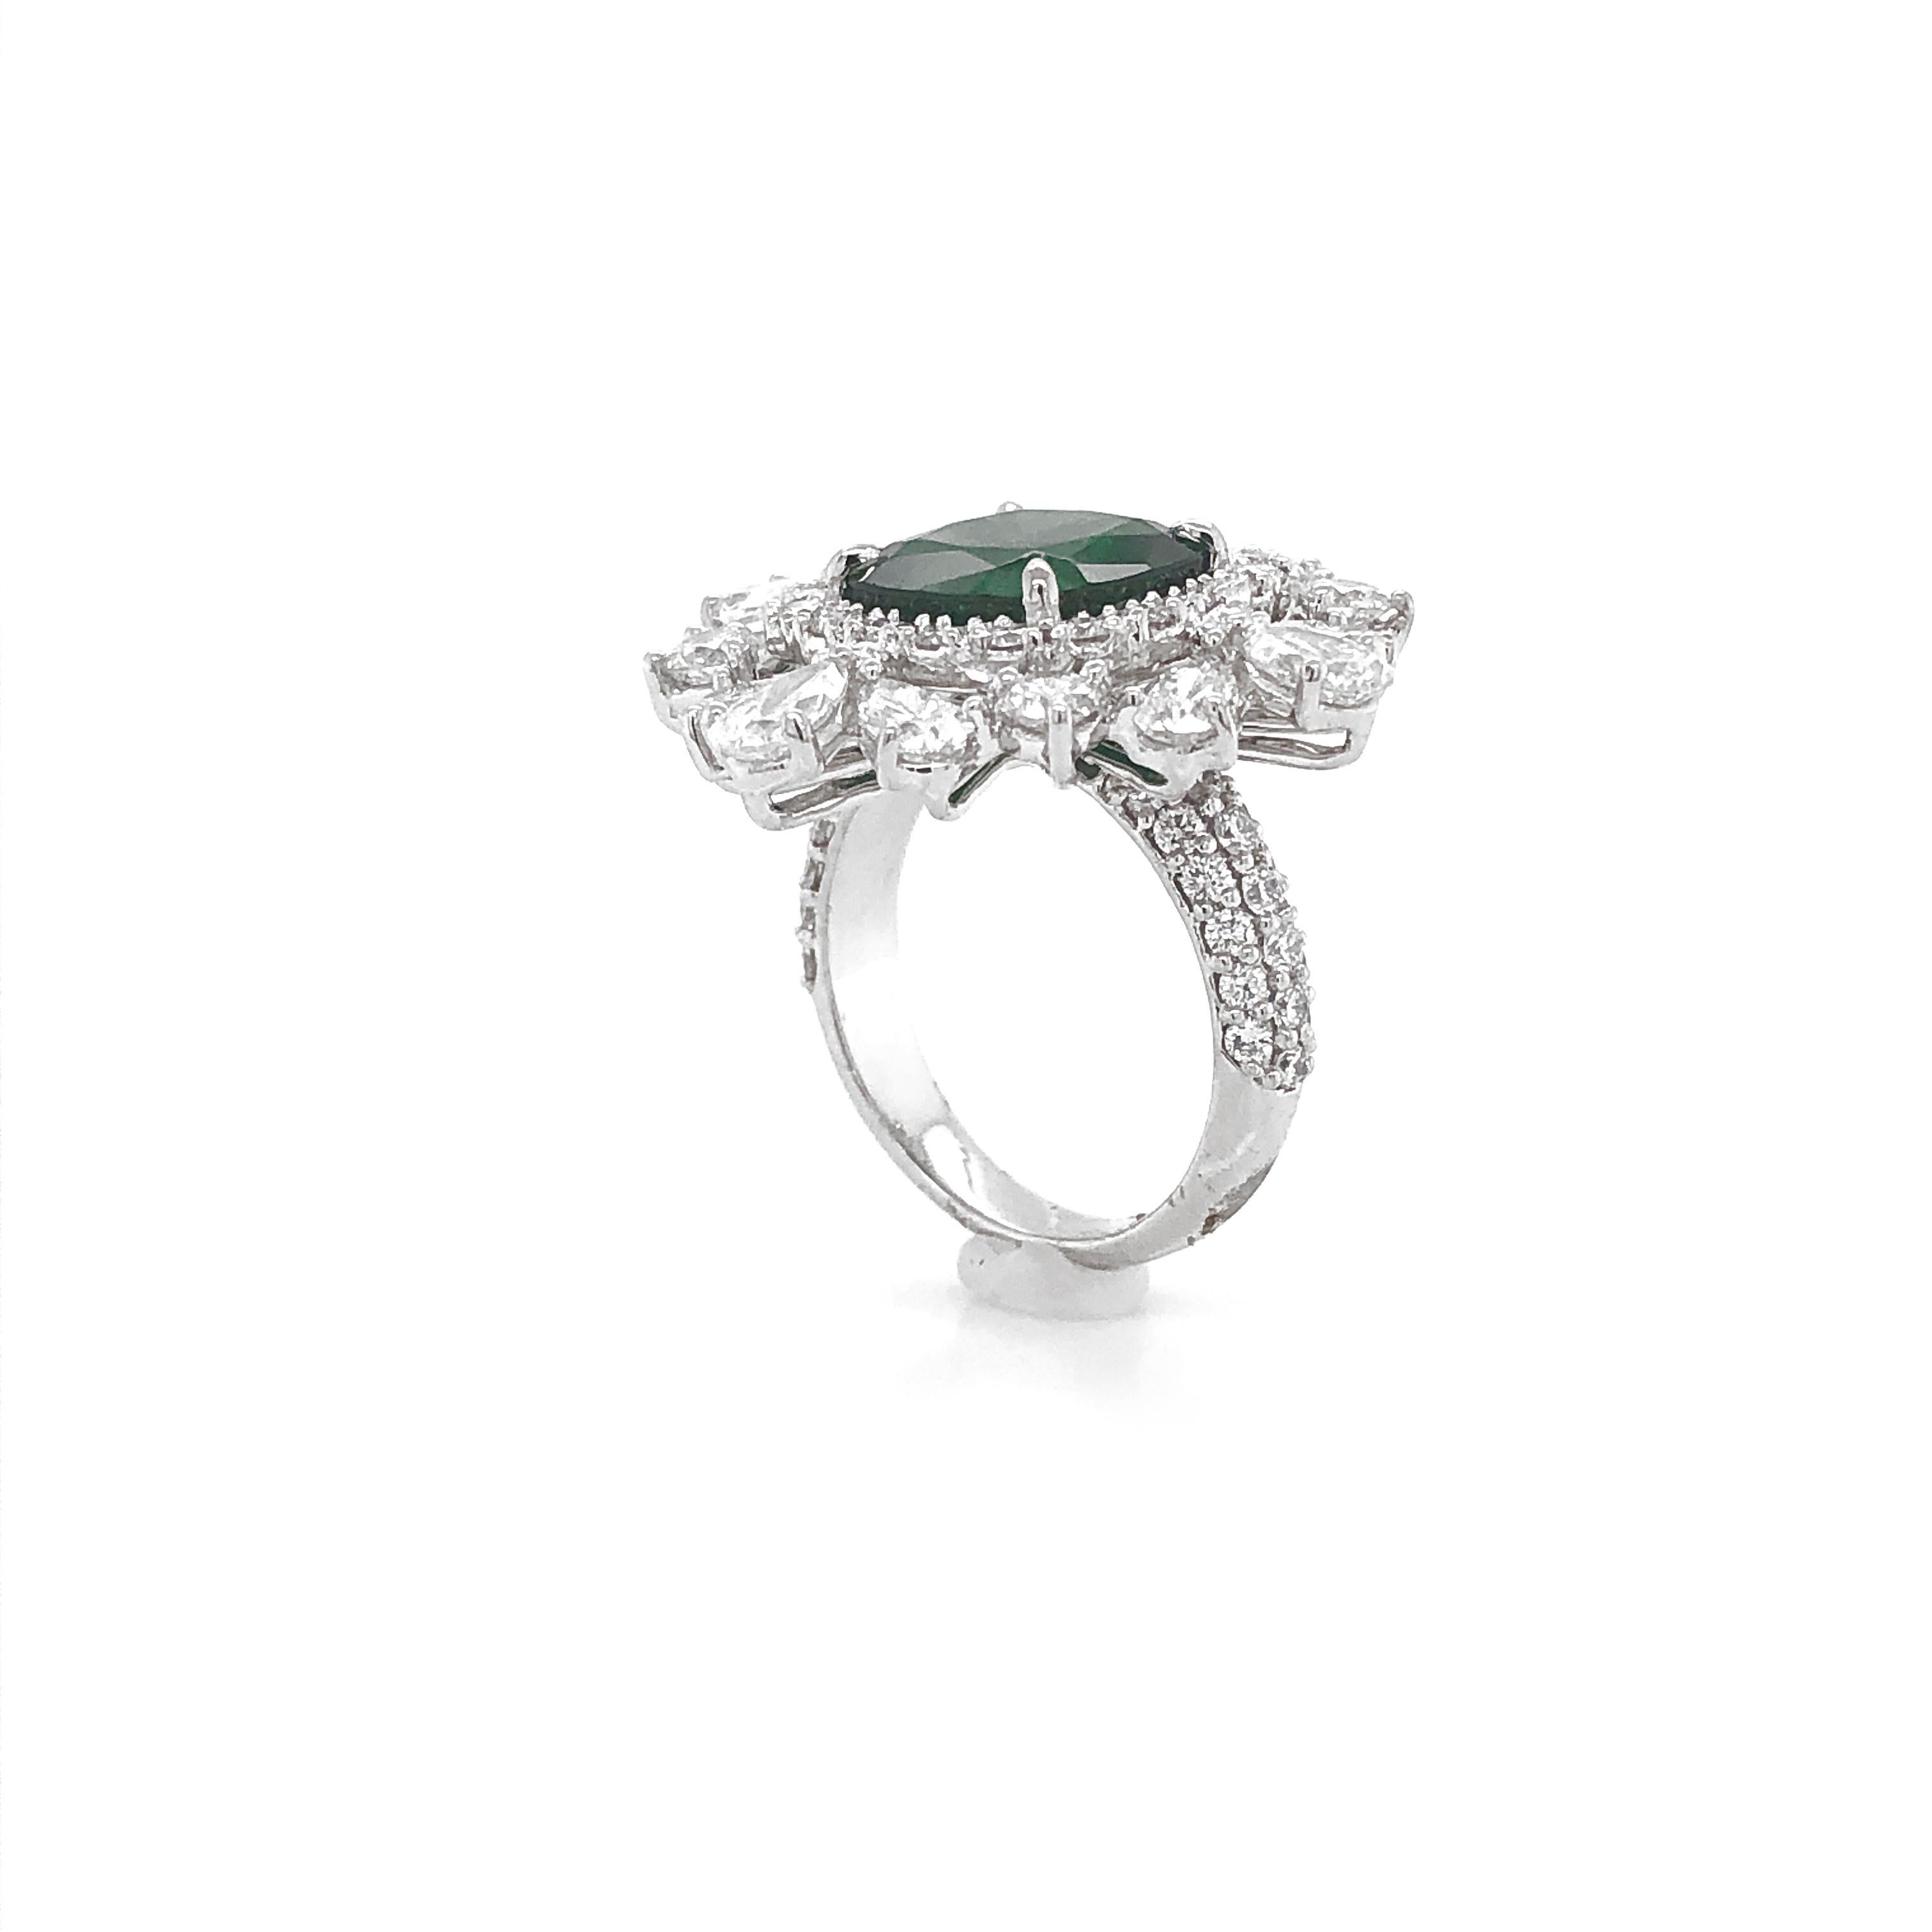 Certified Zambian Cushion Cut Emerald 4.65 Carat Diamond Platinum Cocktail Ring For Sale 3